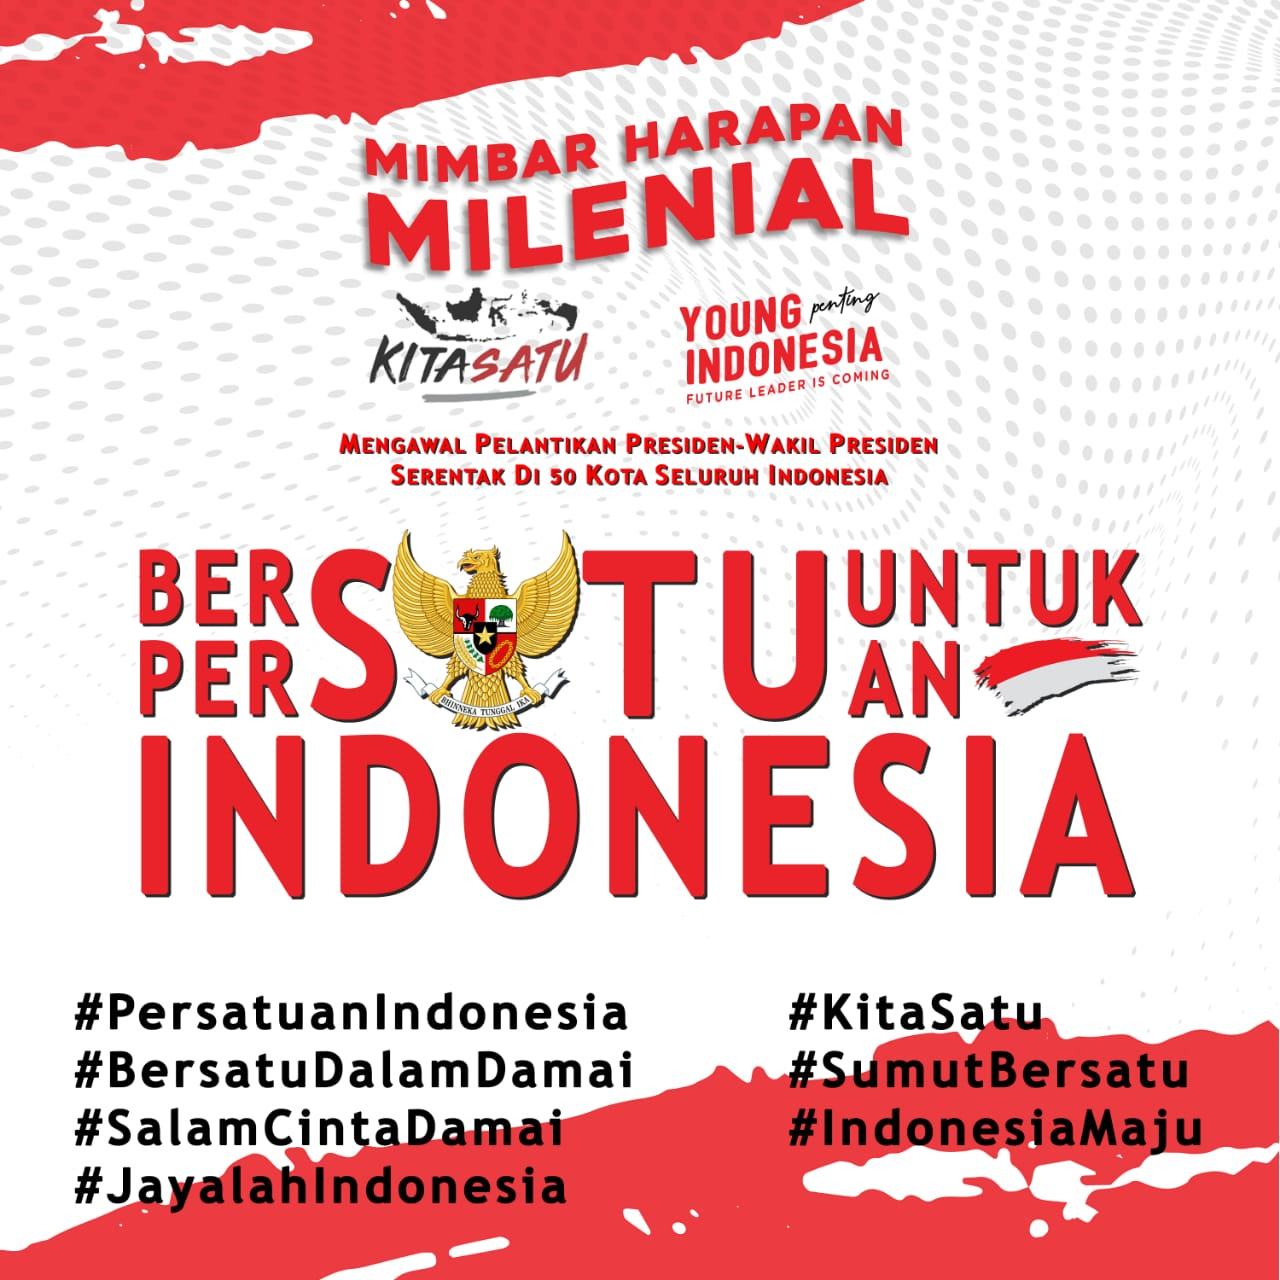 Milenial "Kita Satu", Panggung Harapan Sumatera Utara